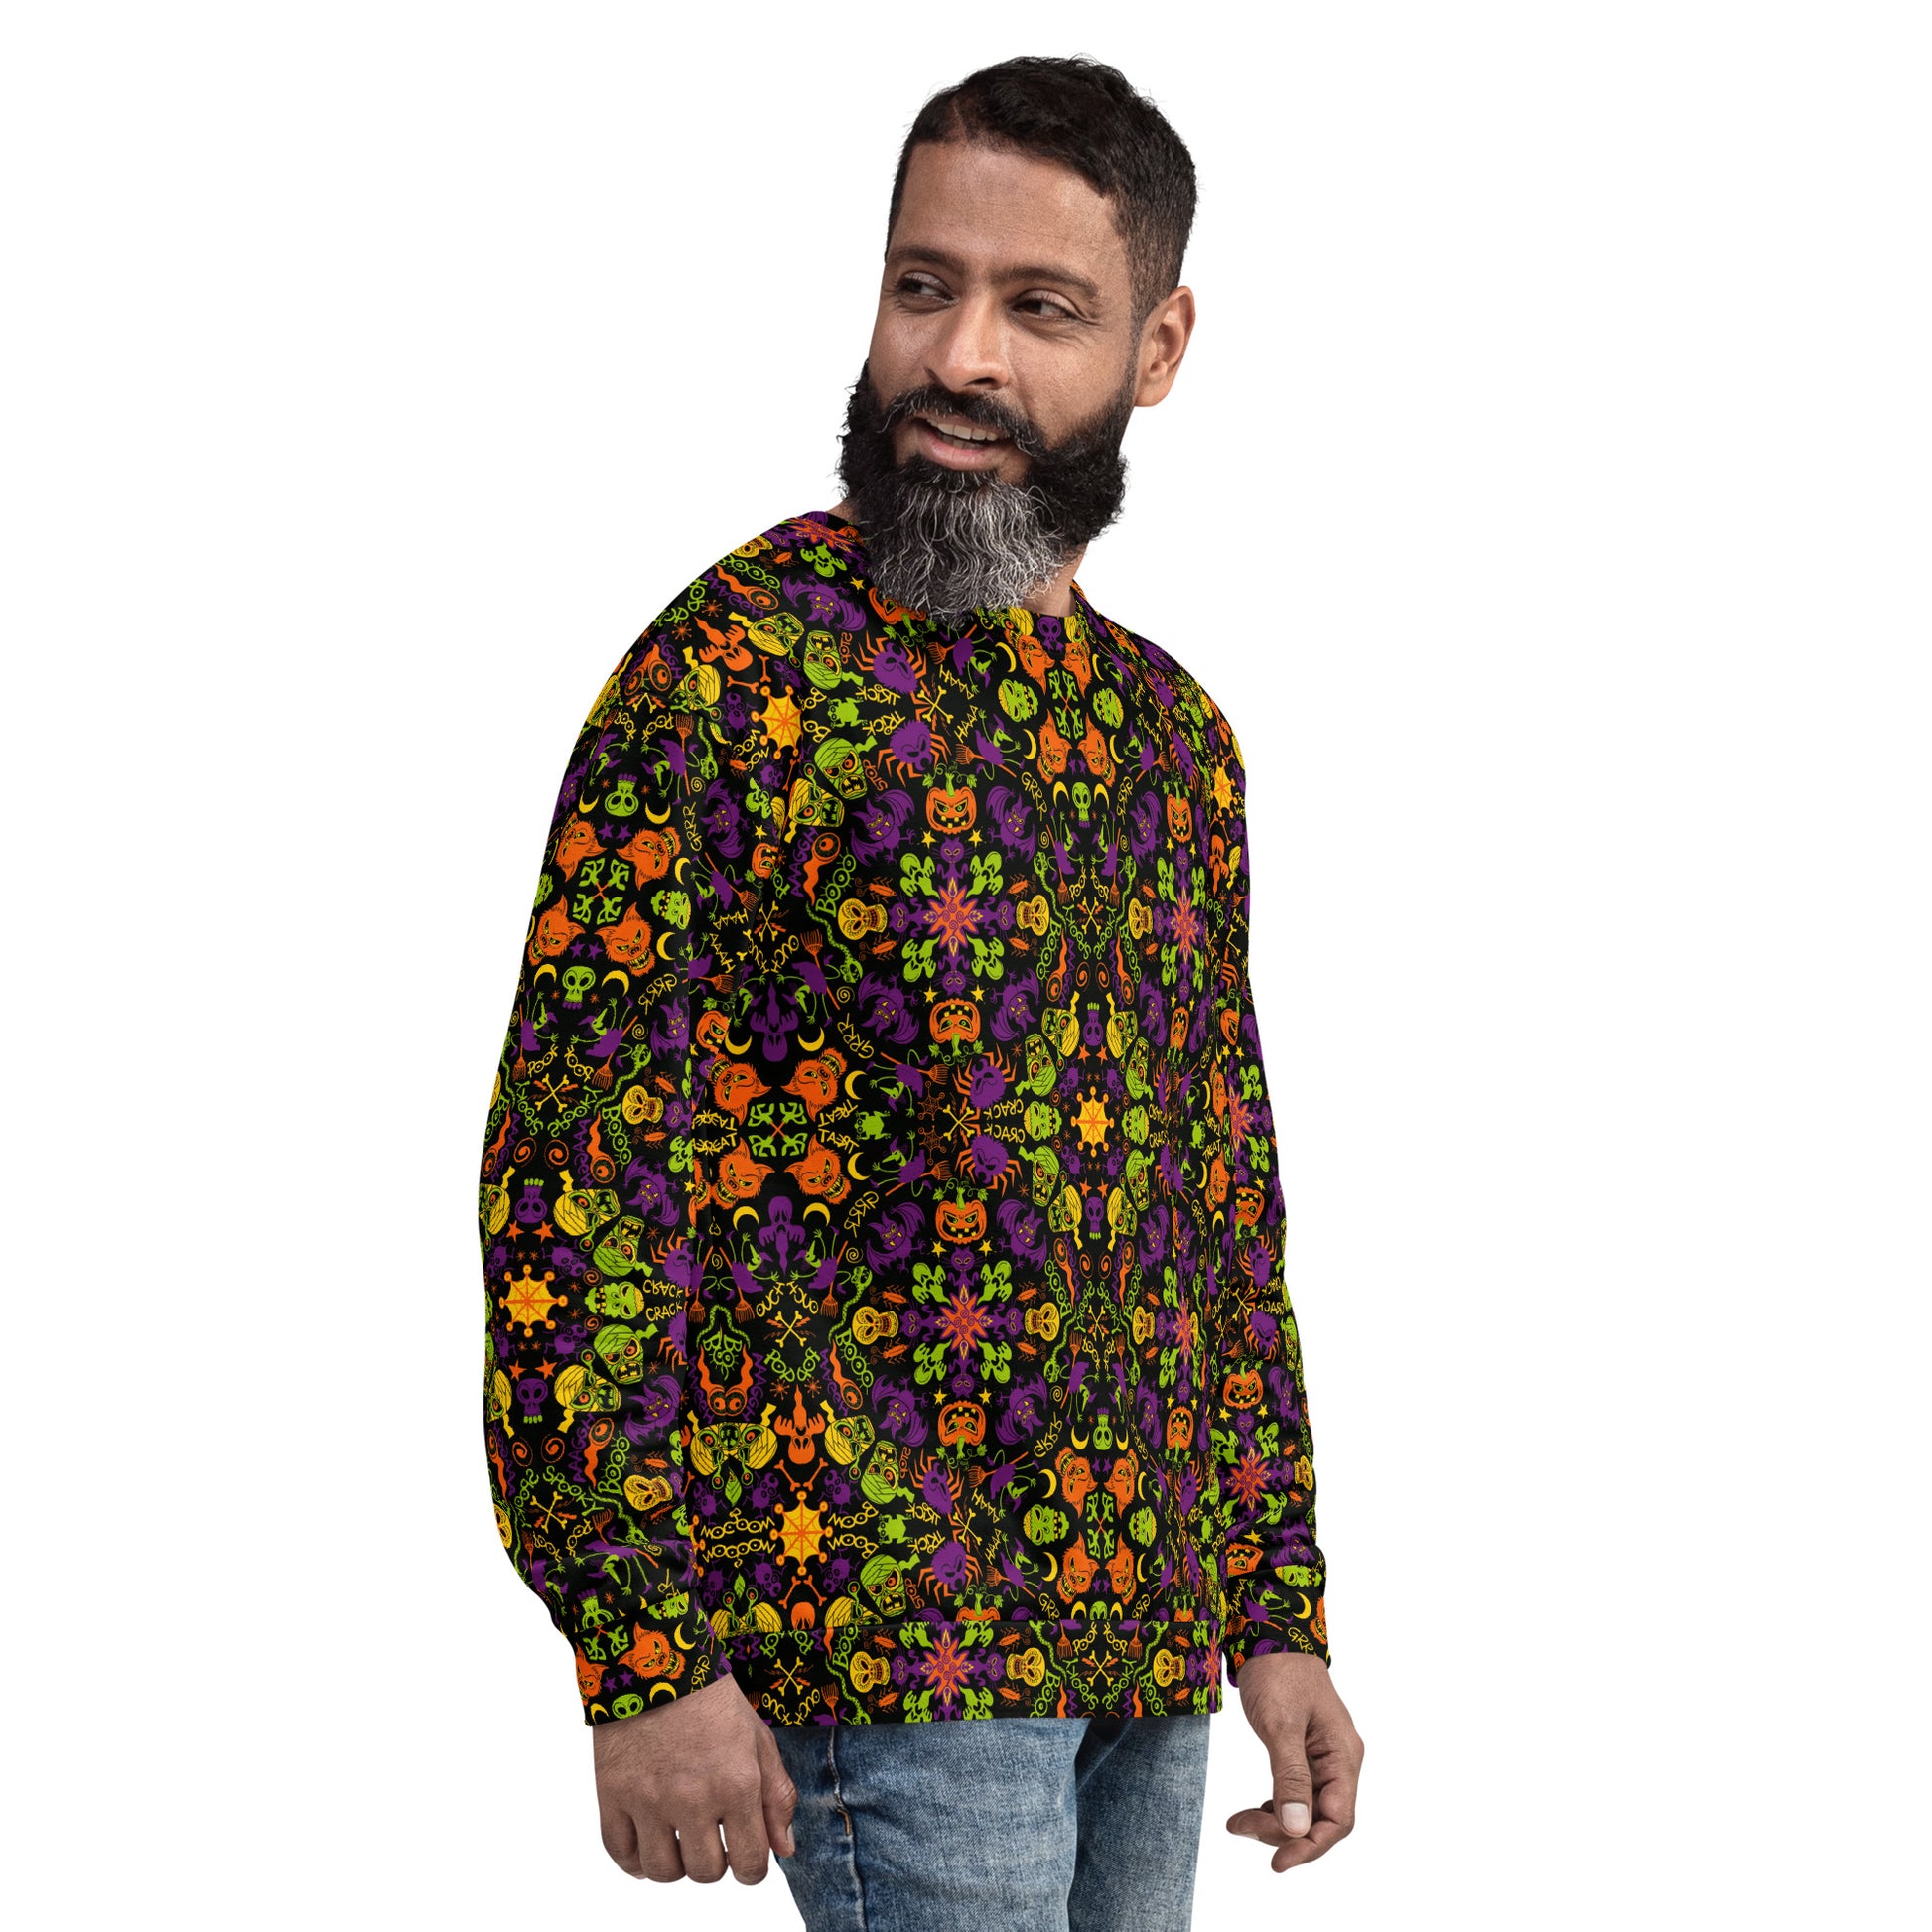 All Halloween stars in a creepy pattern design Unisex Sweatshirt. Cool man wearing All-over print Sweatshirt by Zoo&co